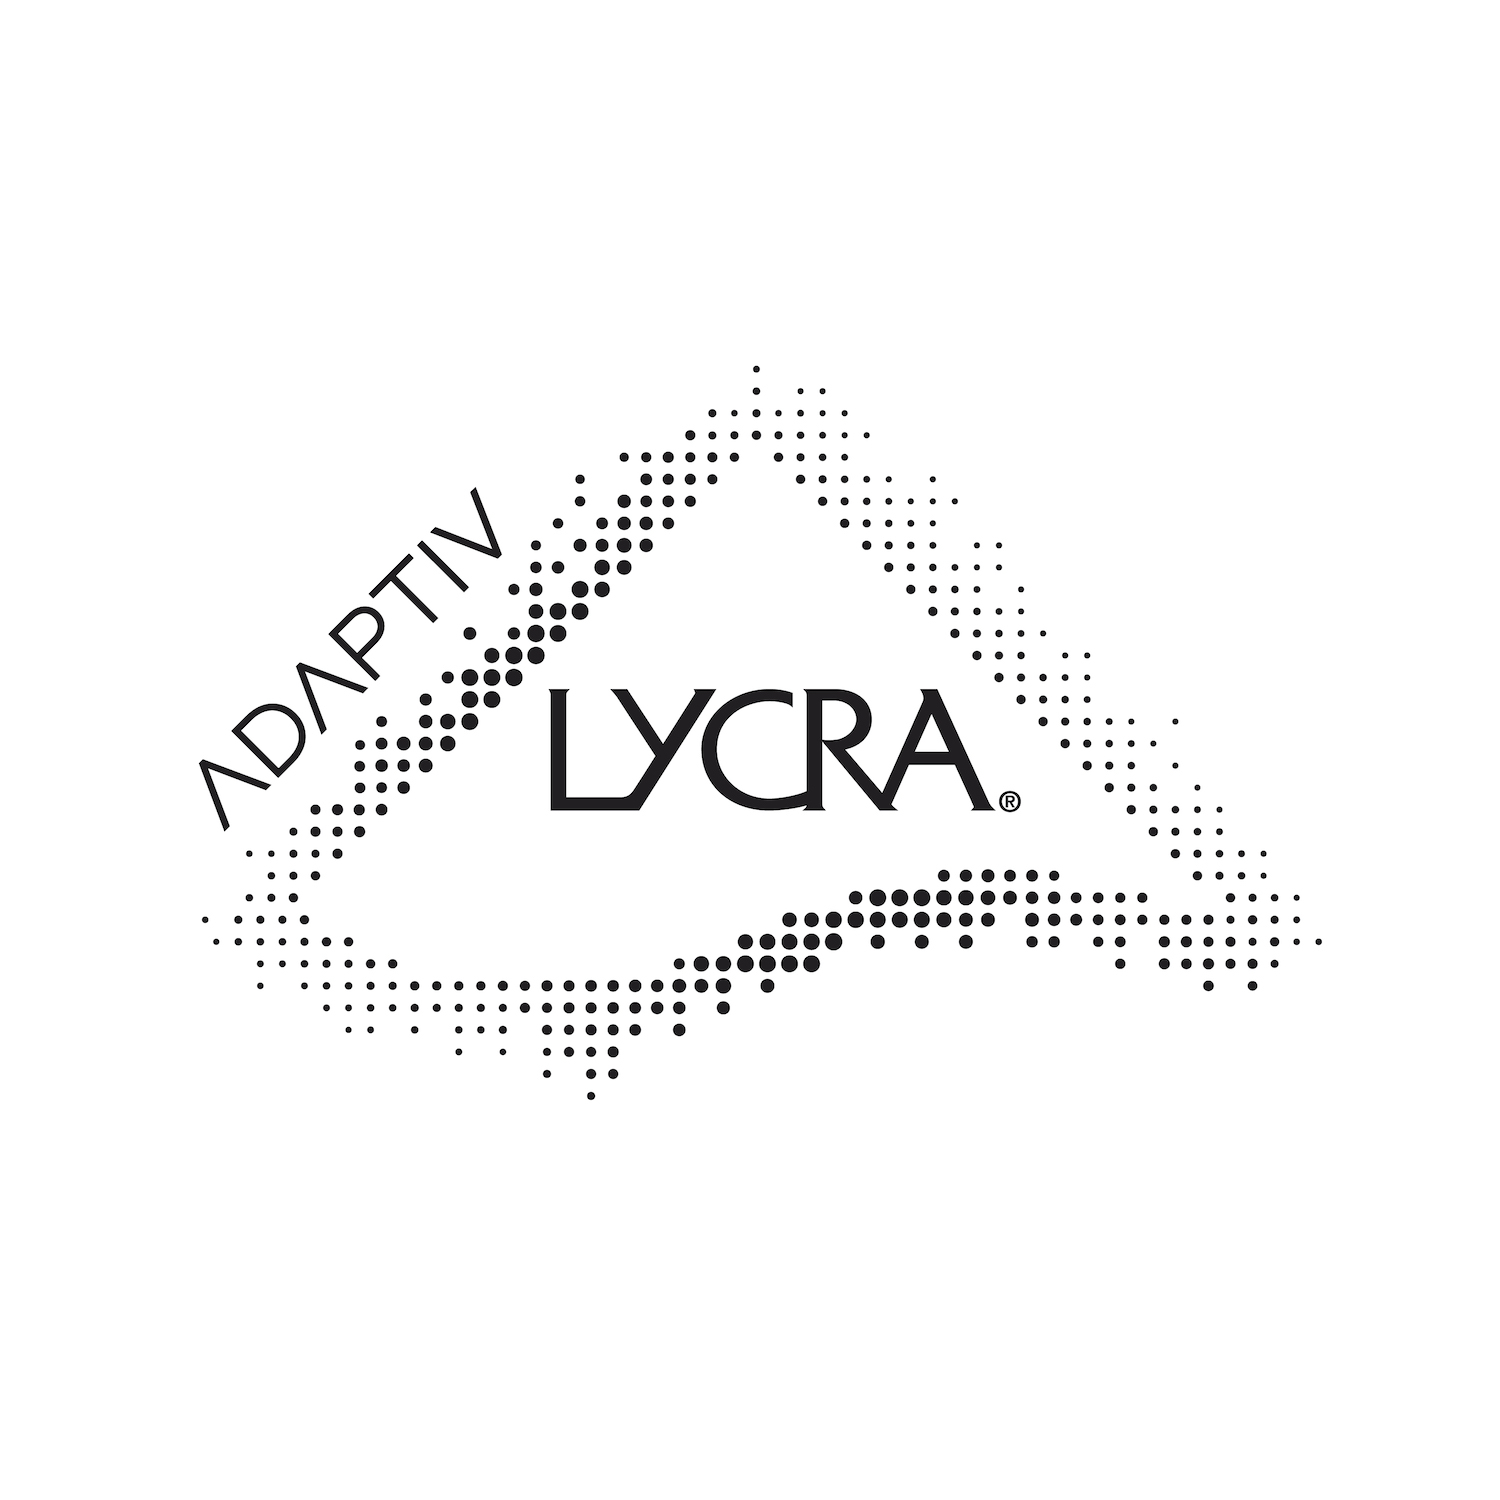 © The Lycra Company 